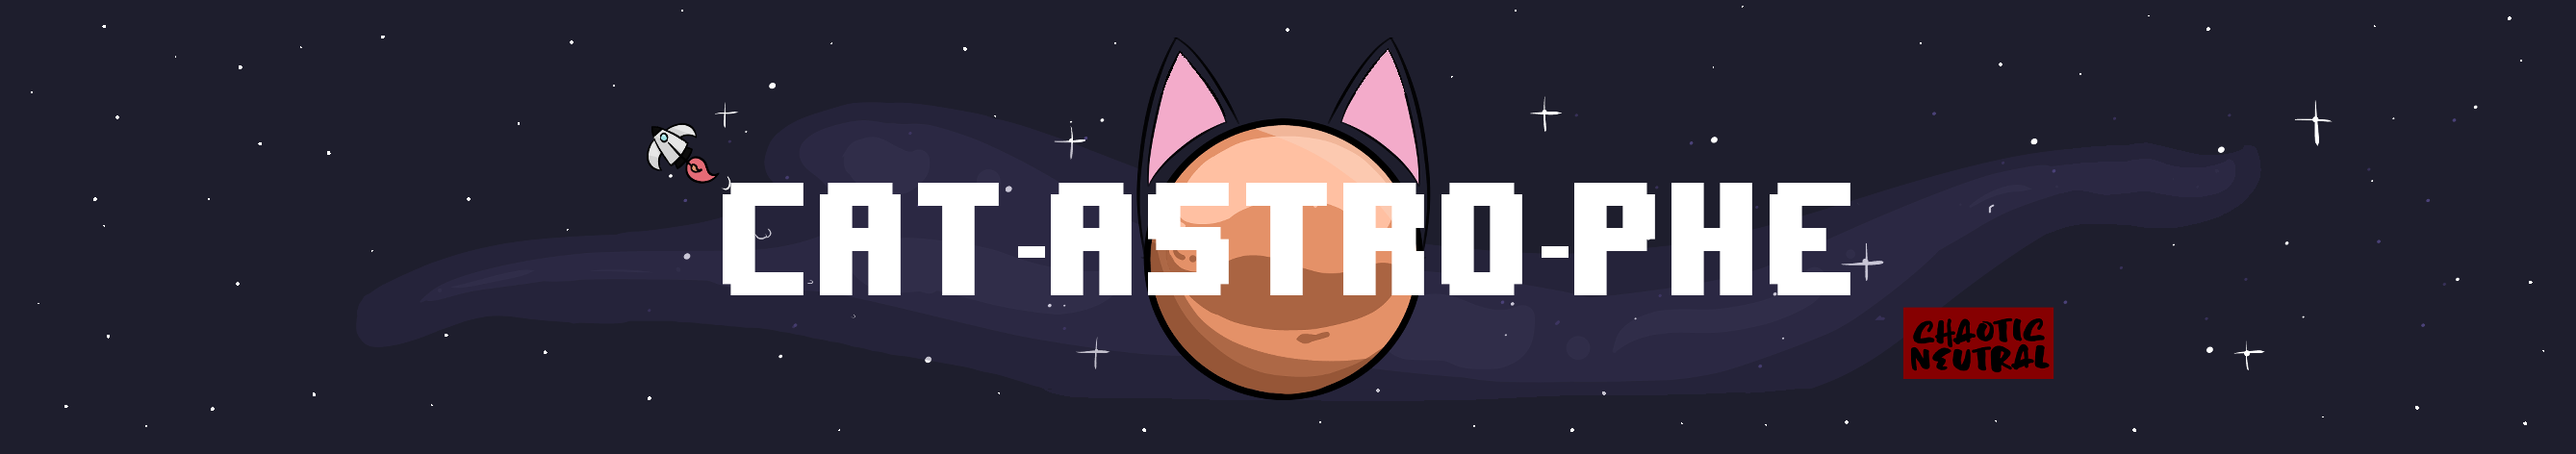 Cat-Astro-Phe